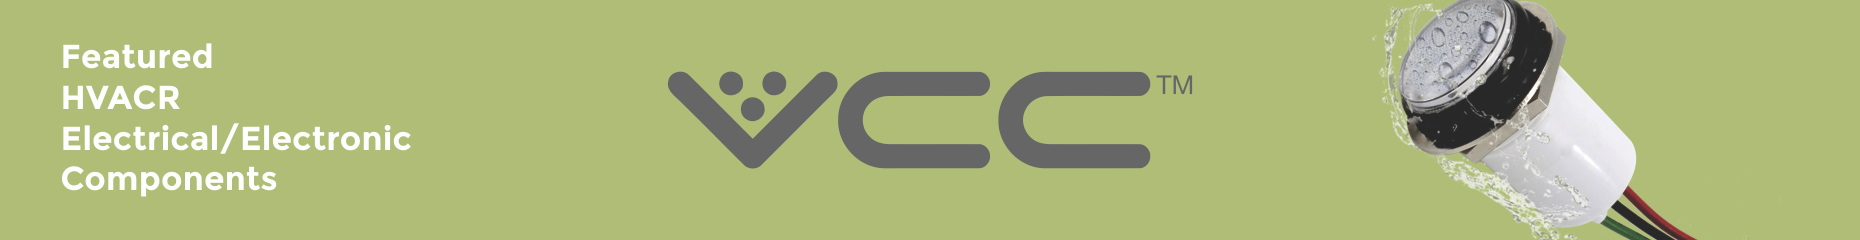 HVACR VCC